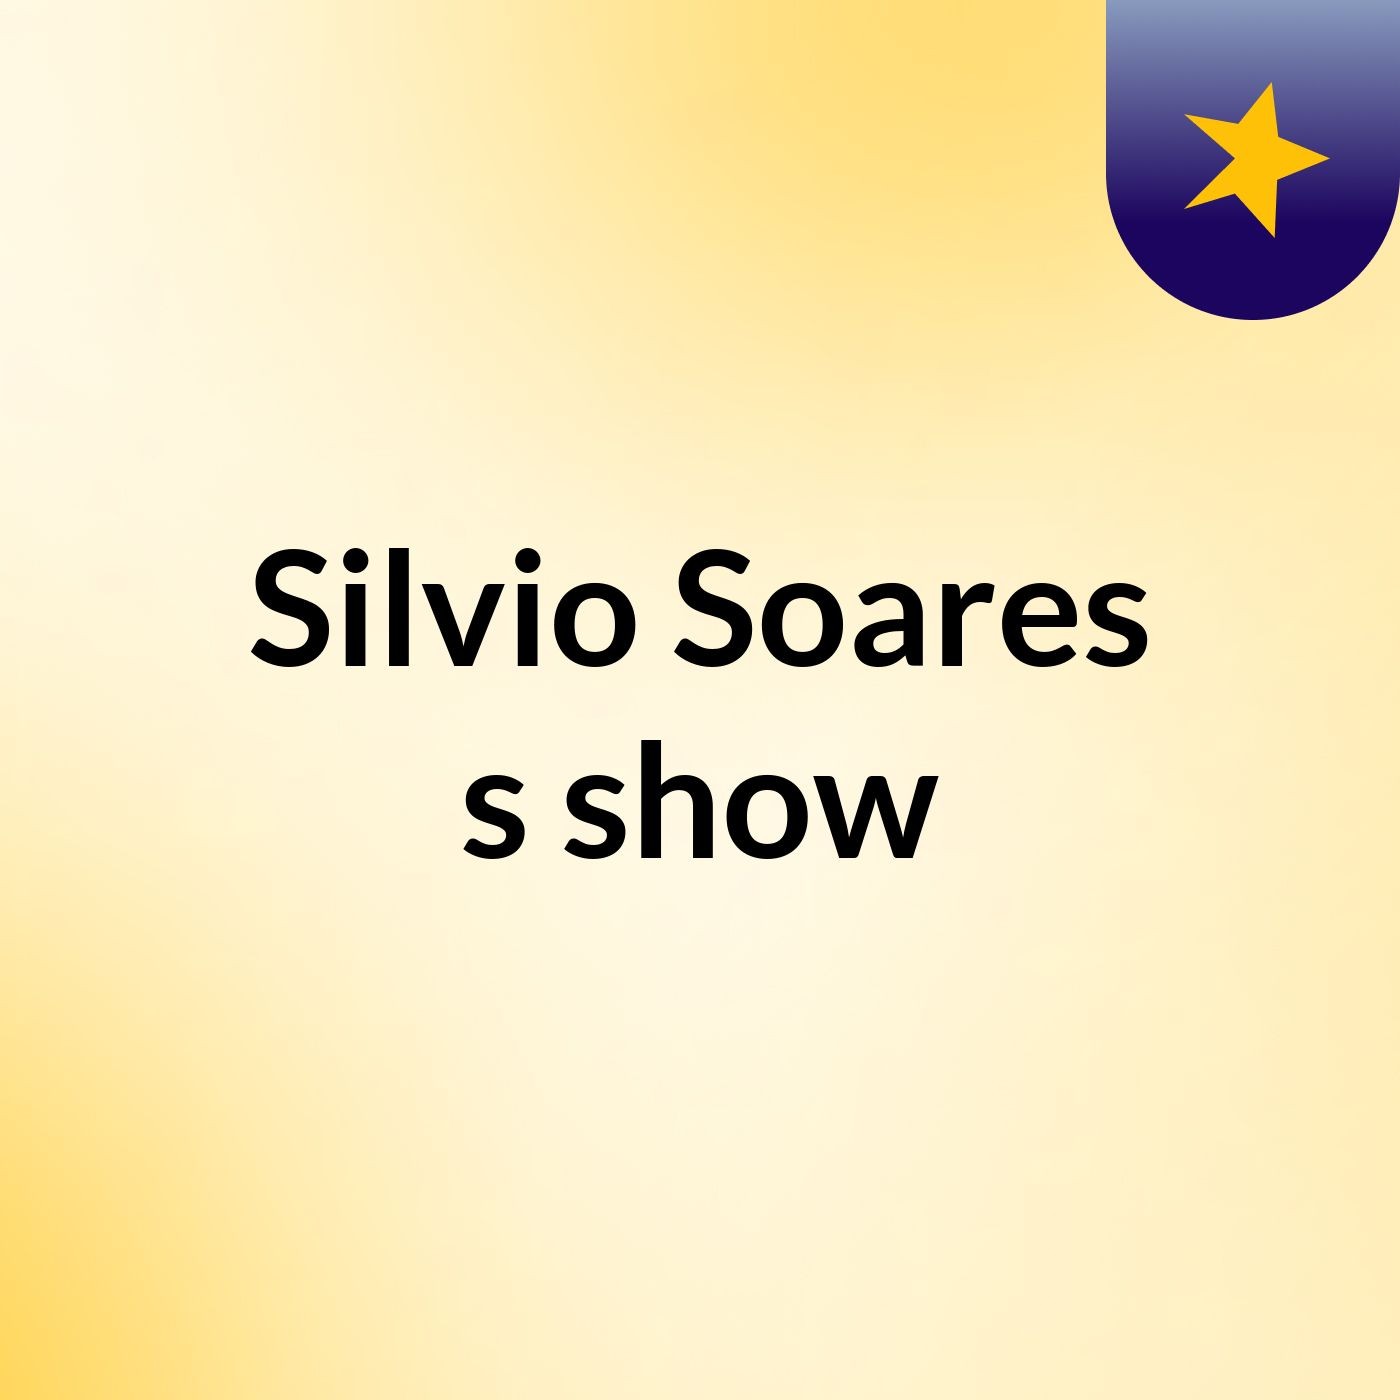 Silvio Soares's show